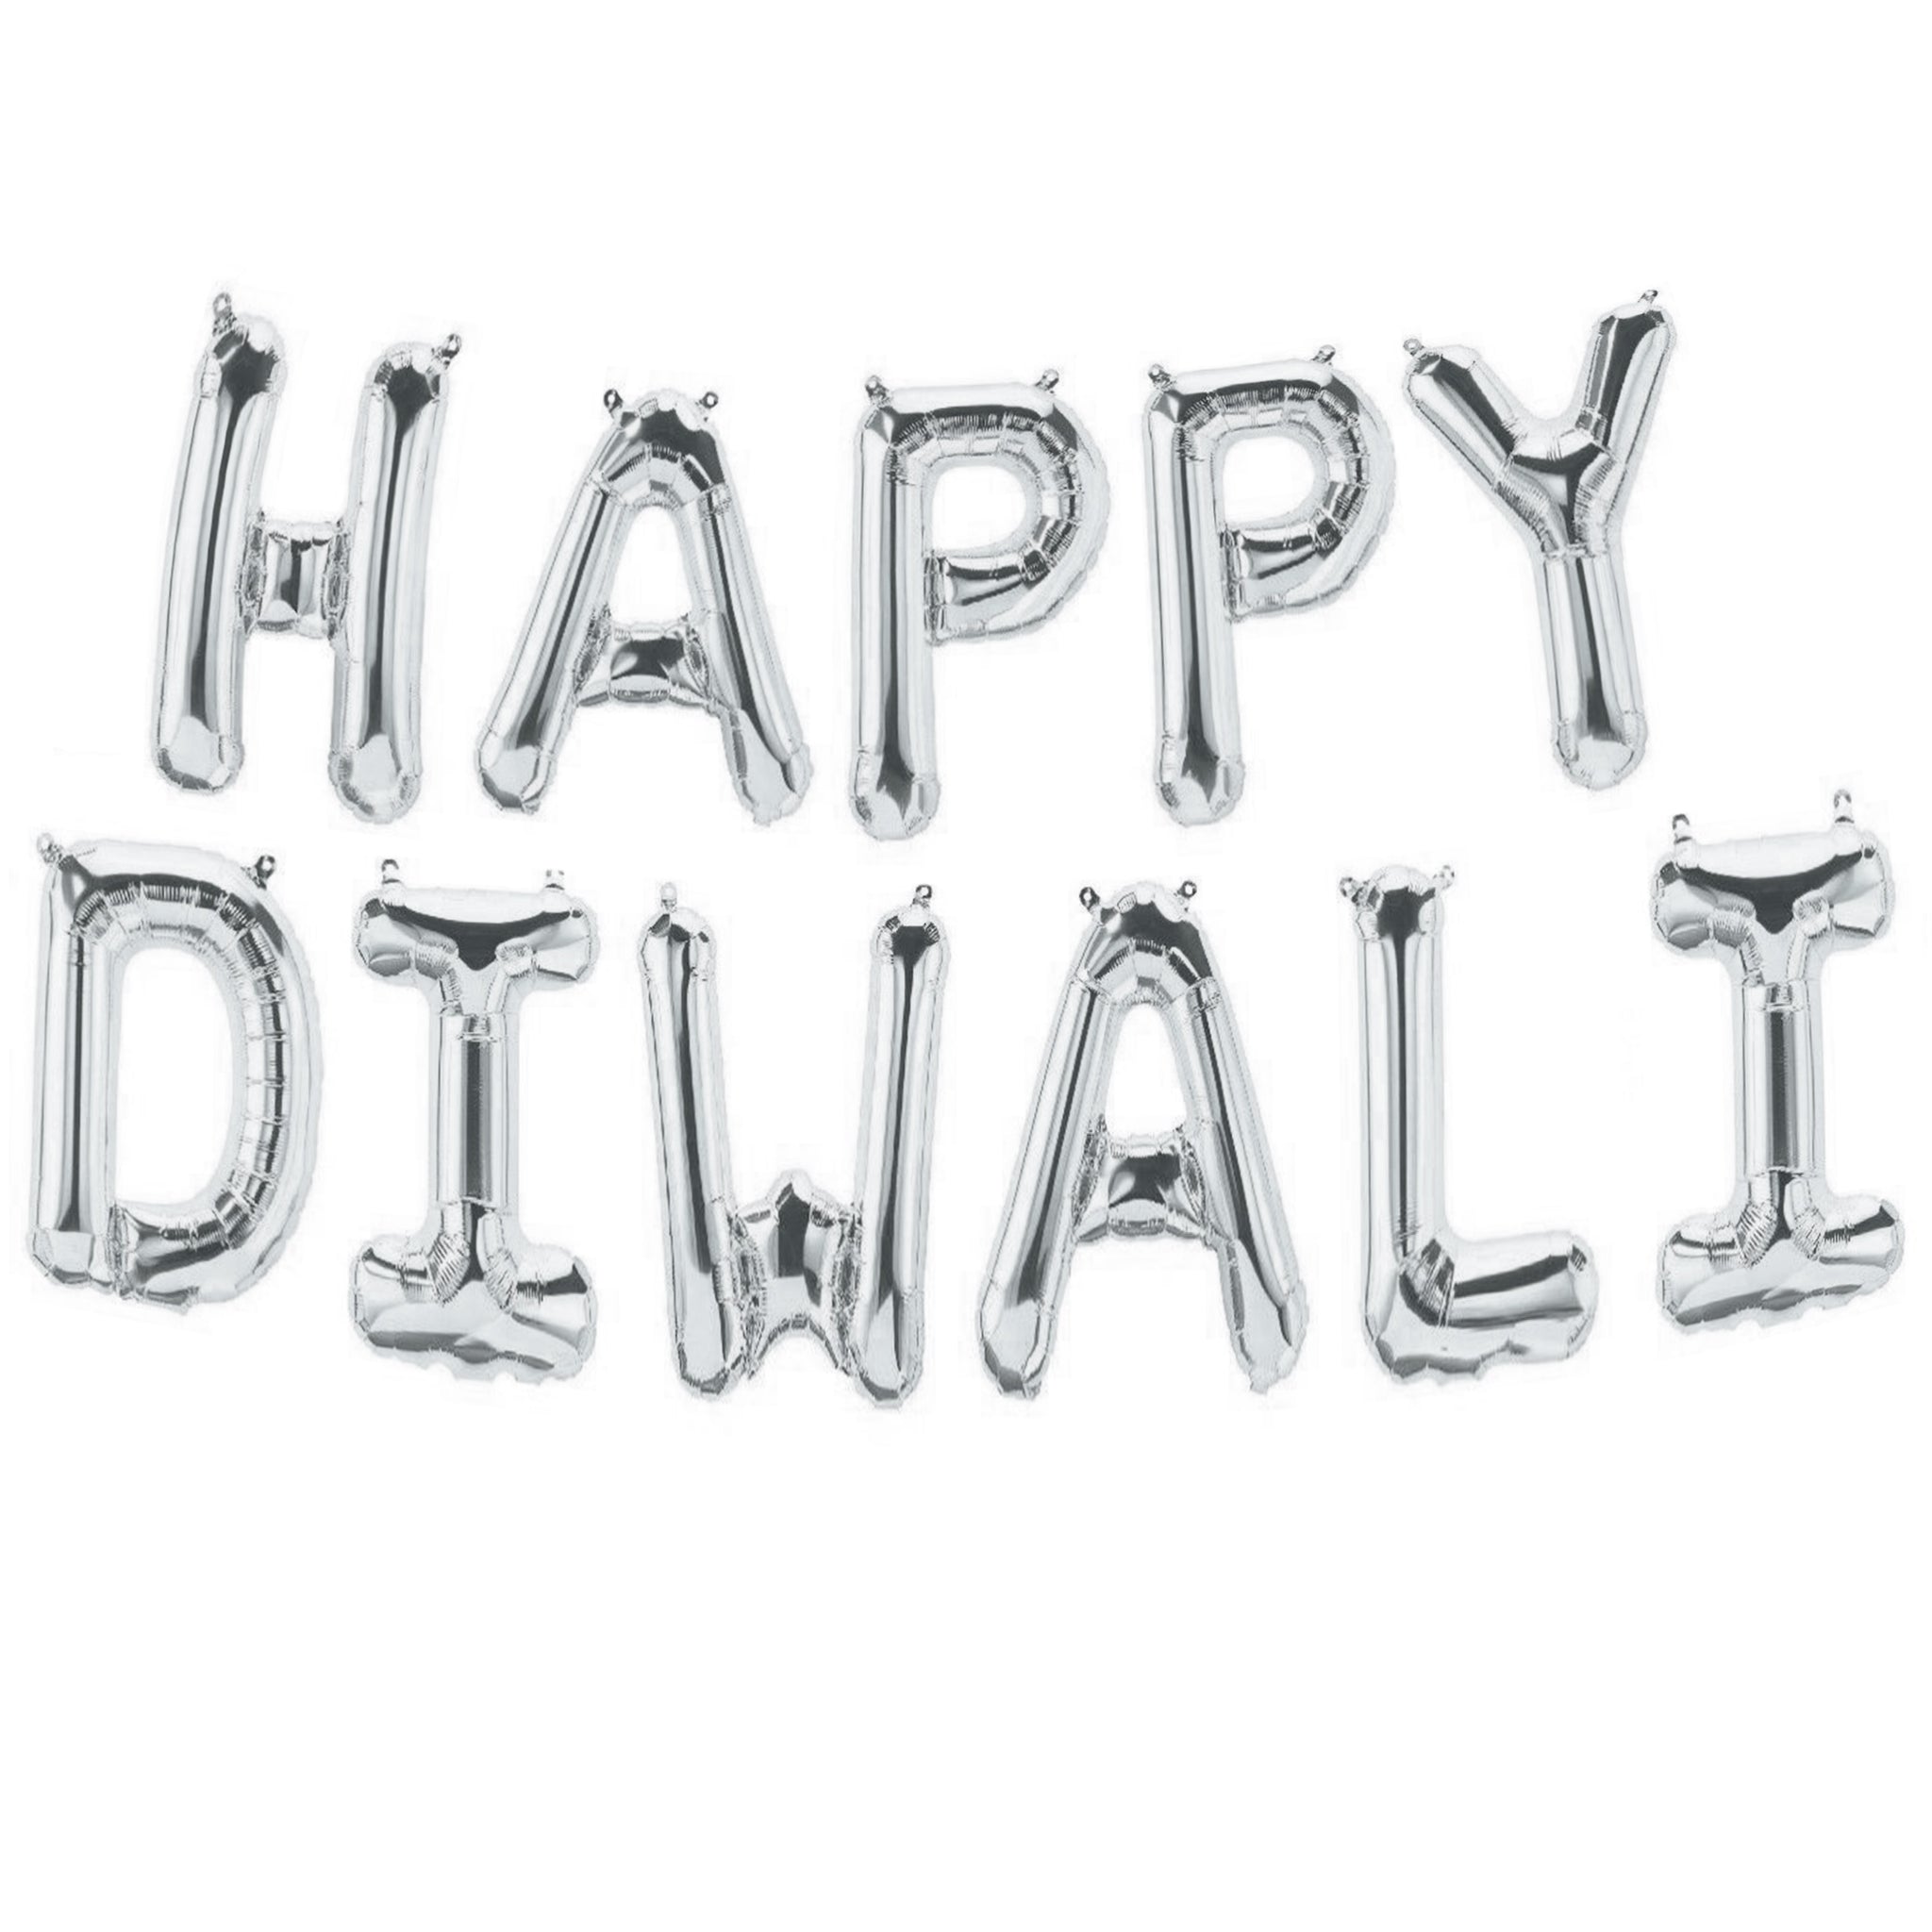 Happy diwali letter balloons for sale online in Dubai